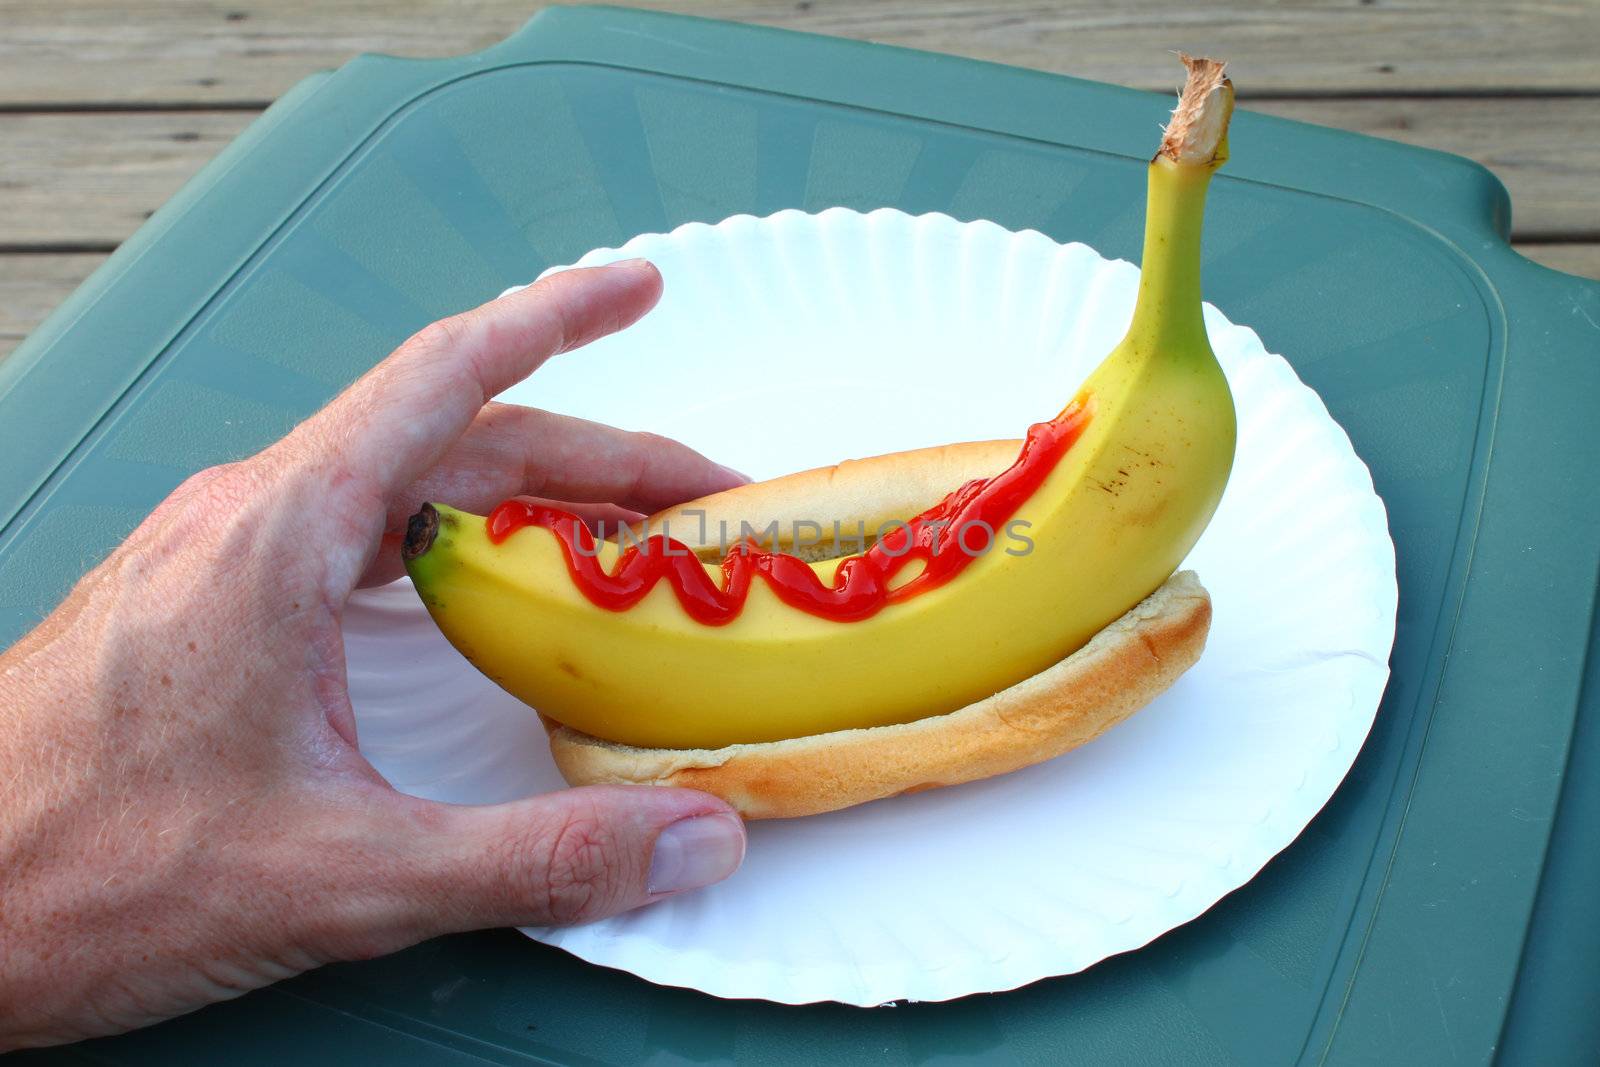 Strange food: Banana-dog with ketchup